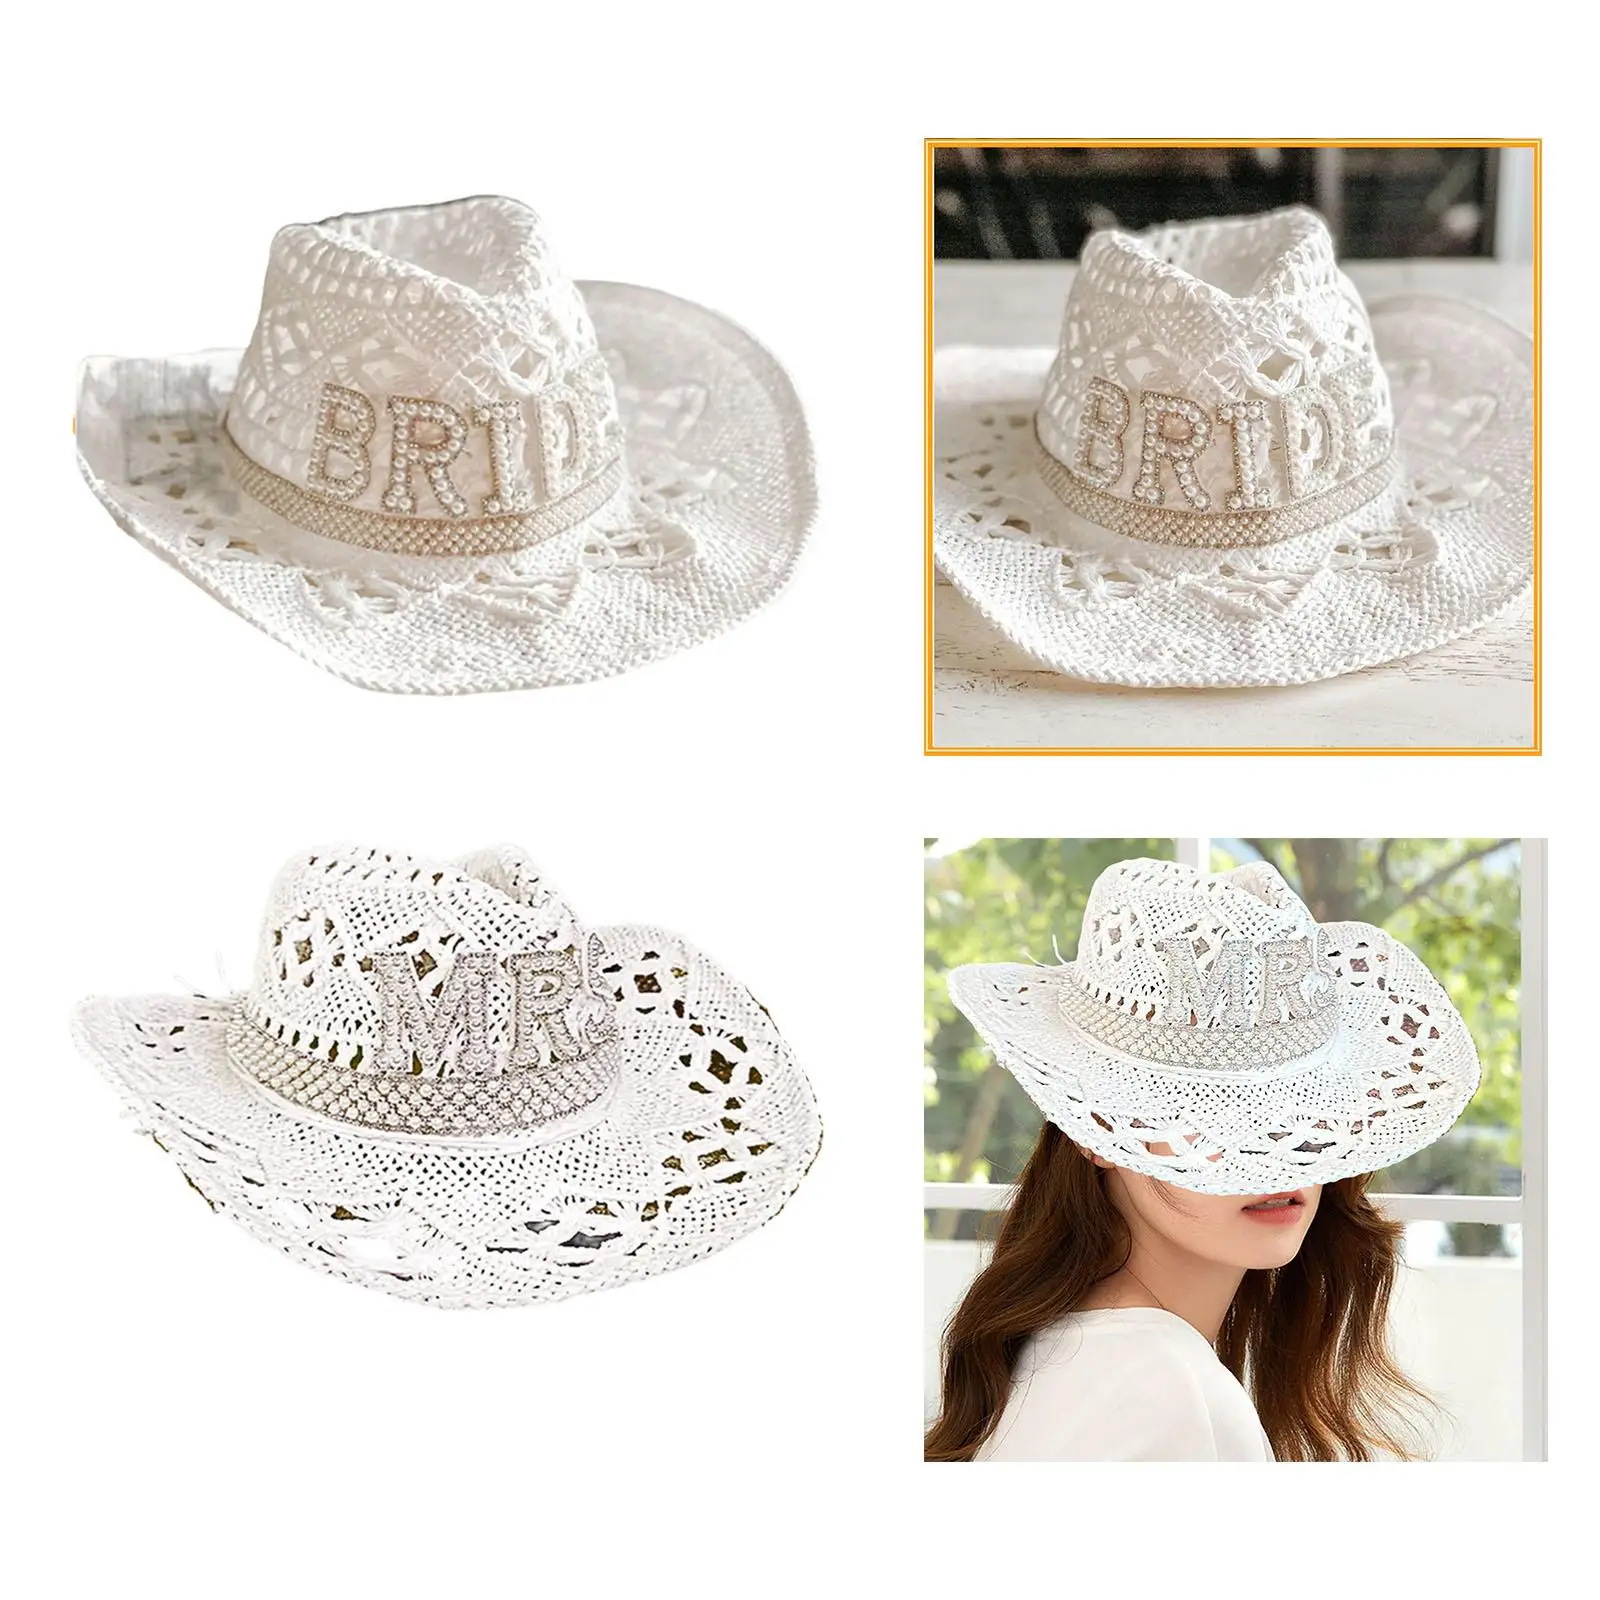 Western Decor Cow Boy Hats Costumes Accessories Wide Brim Sun Hat Adult Girls Women Hat for Bridal Summer Outdoor Wedding